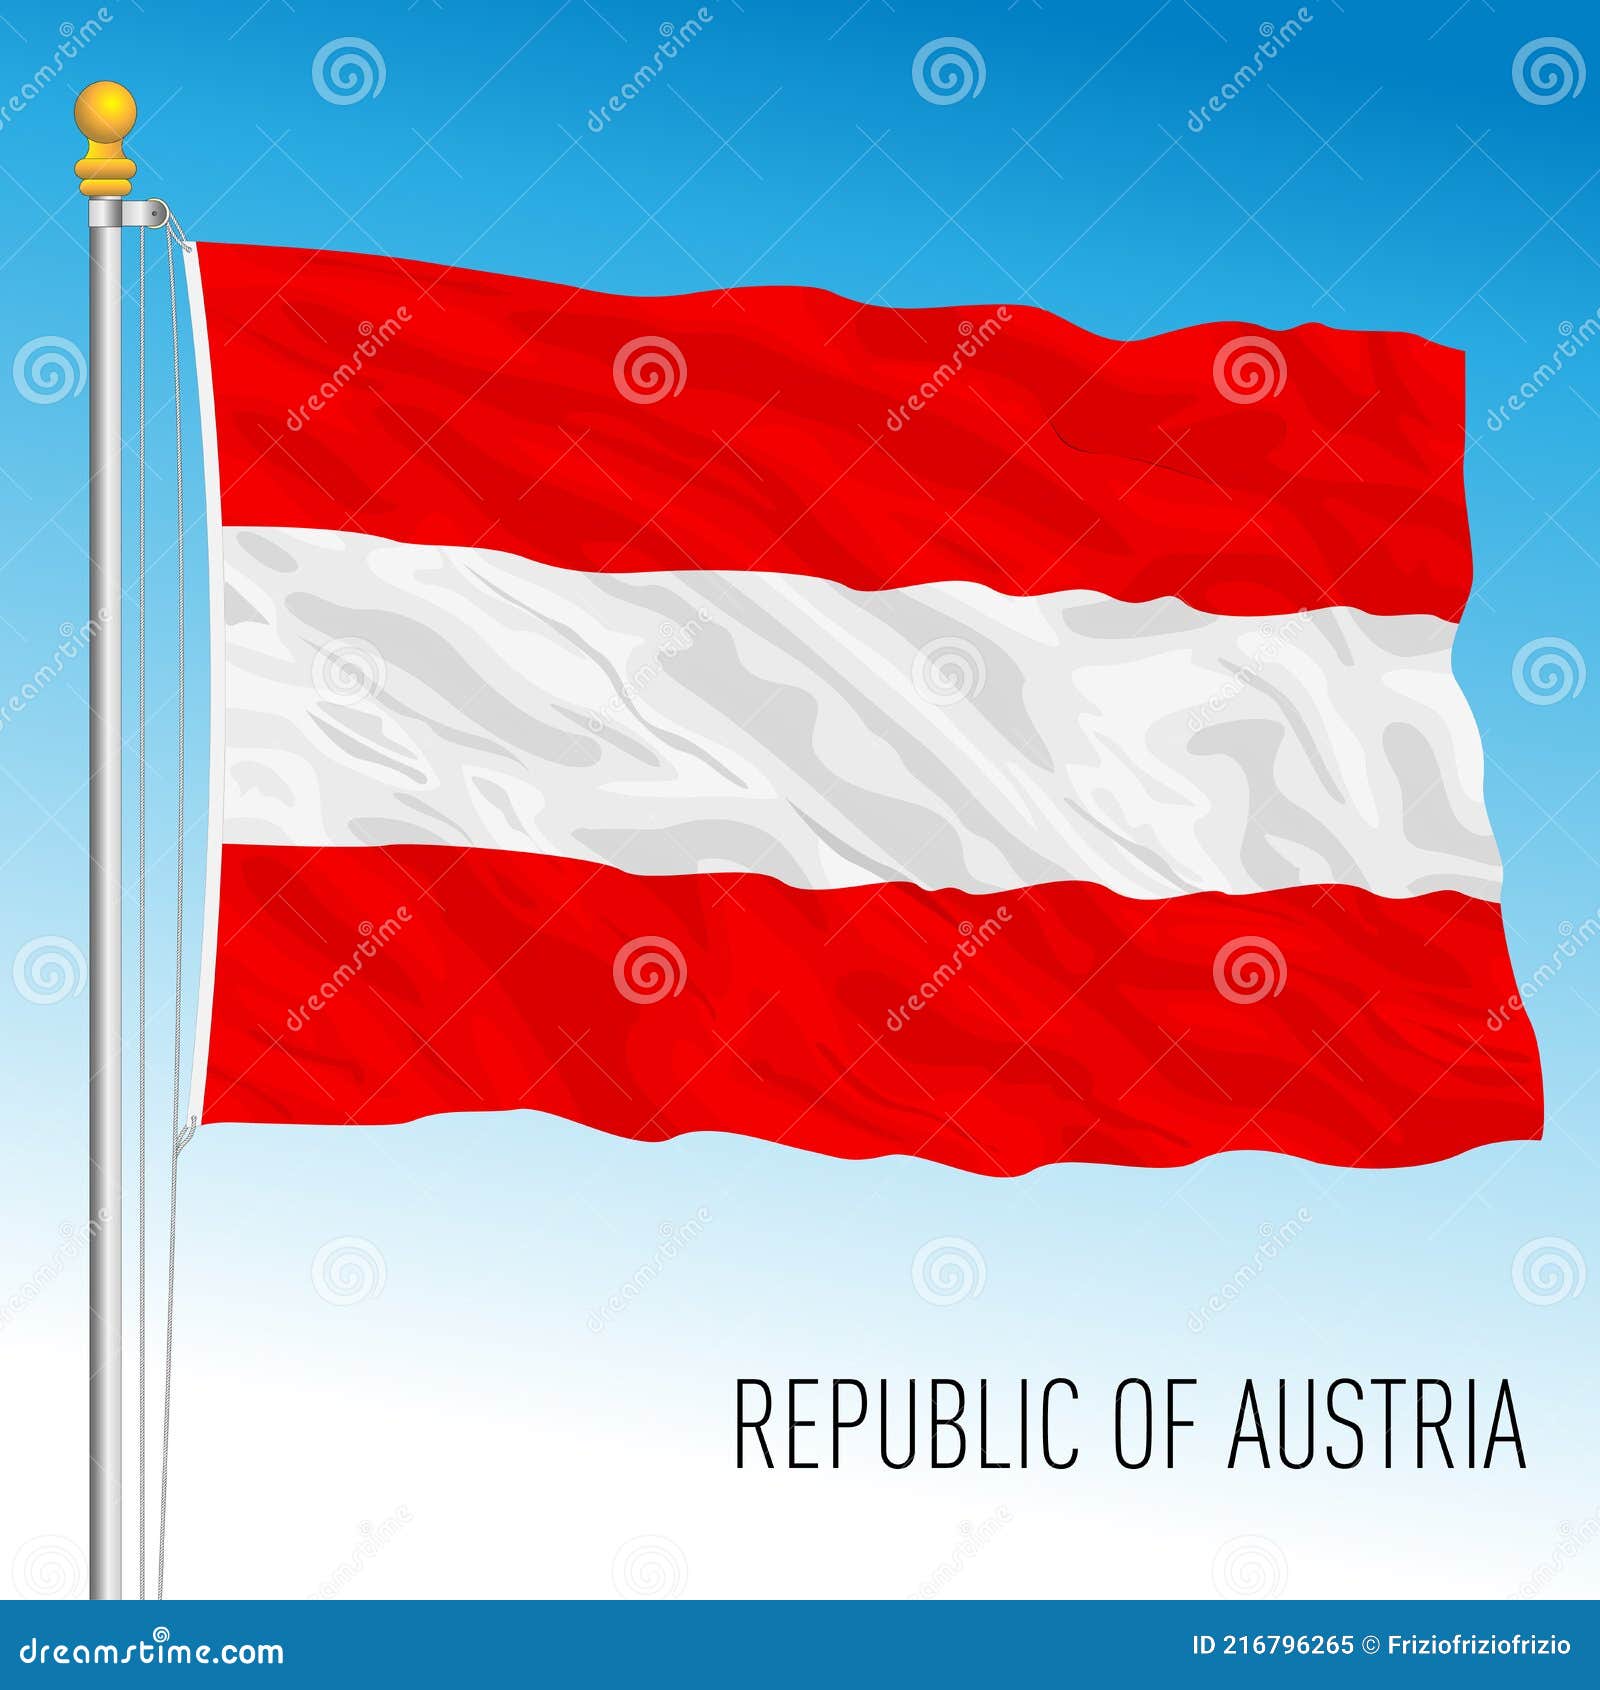 Austria National Flag vector design. Austria flag 3D waving